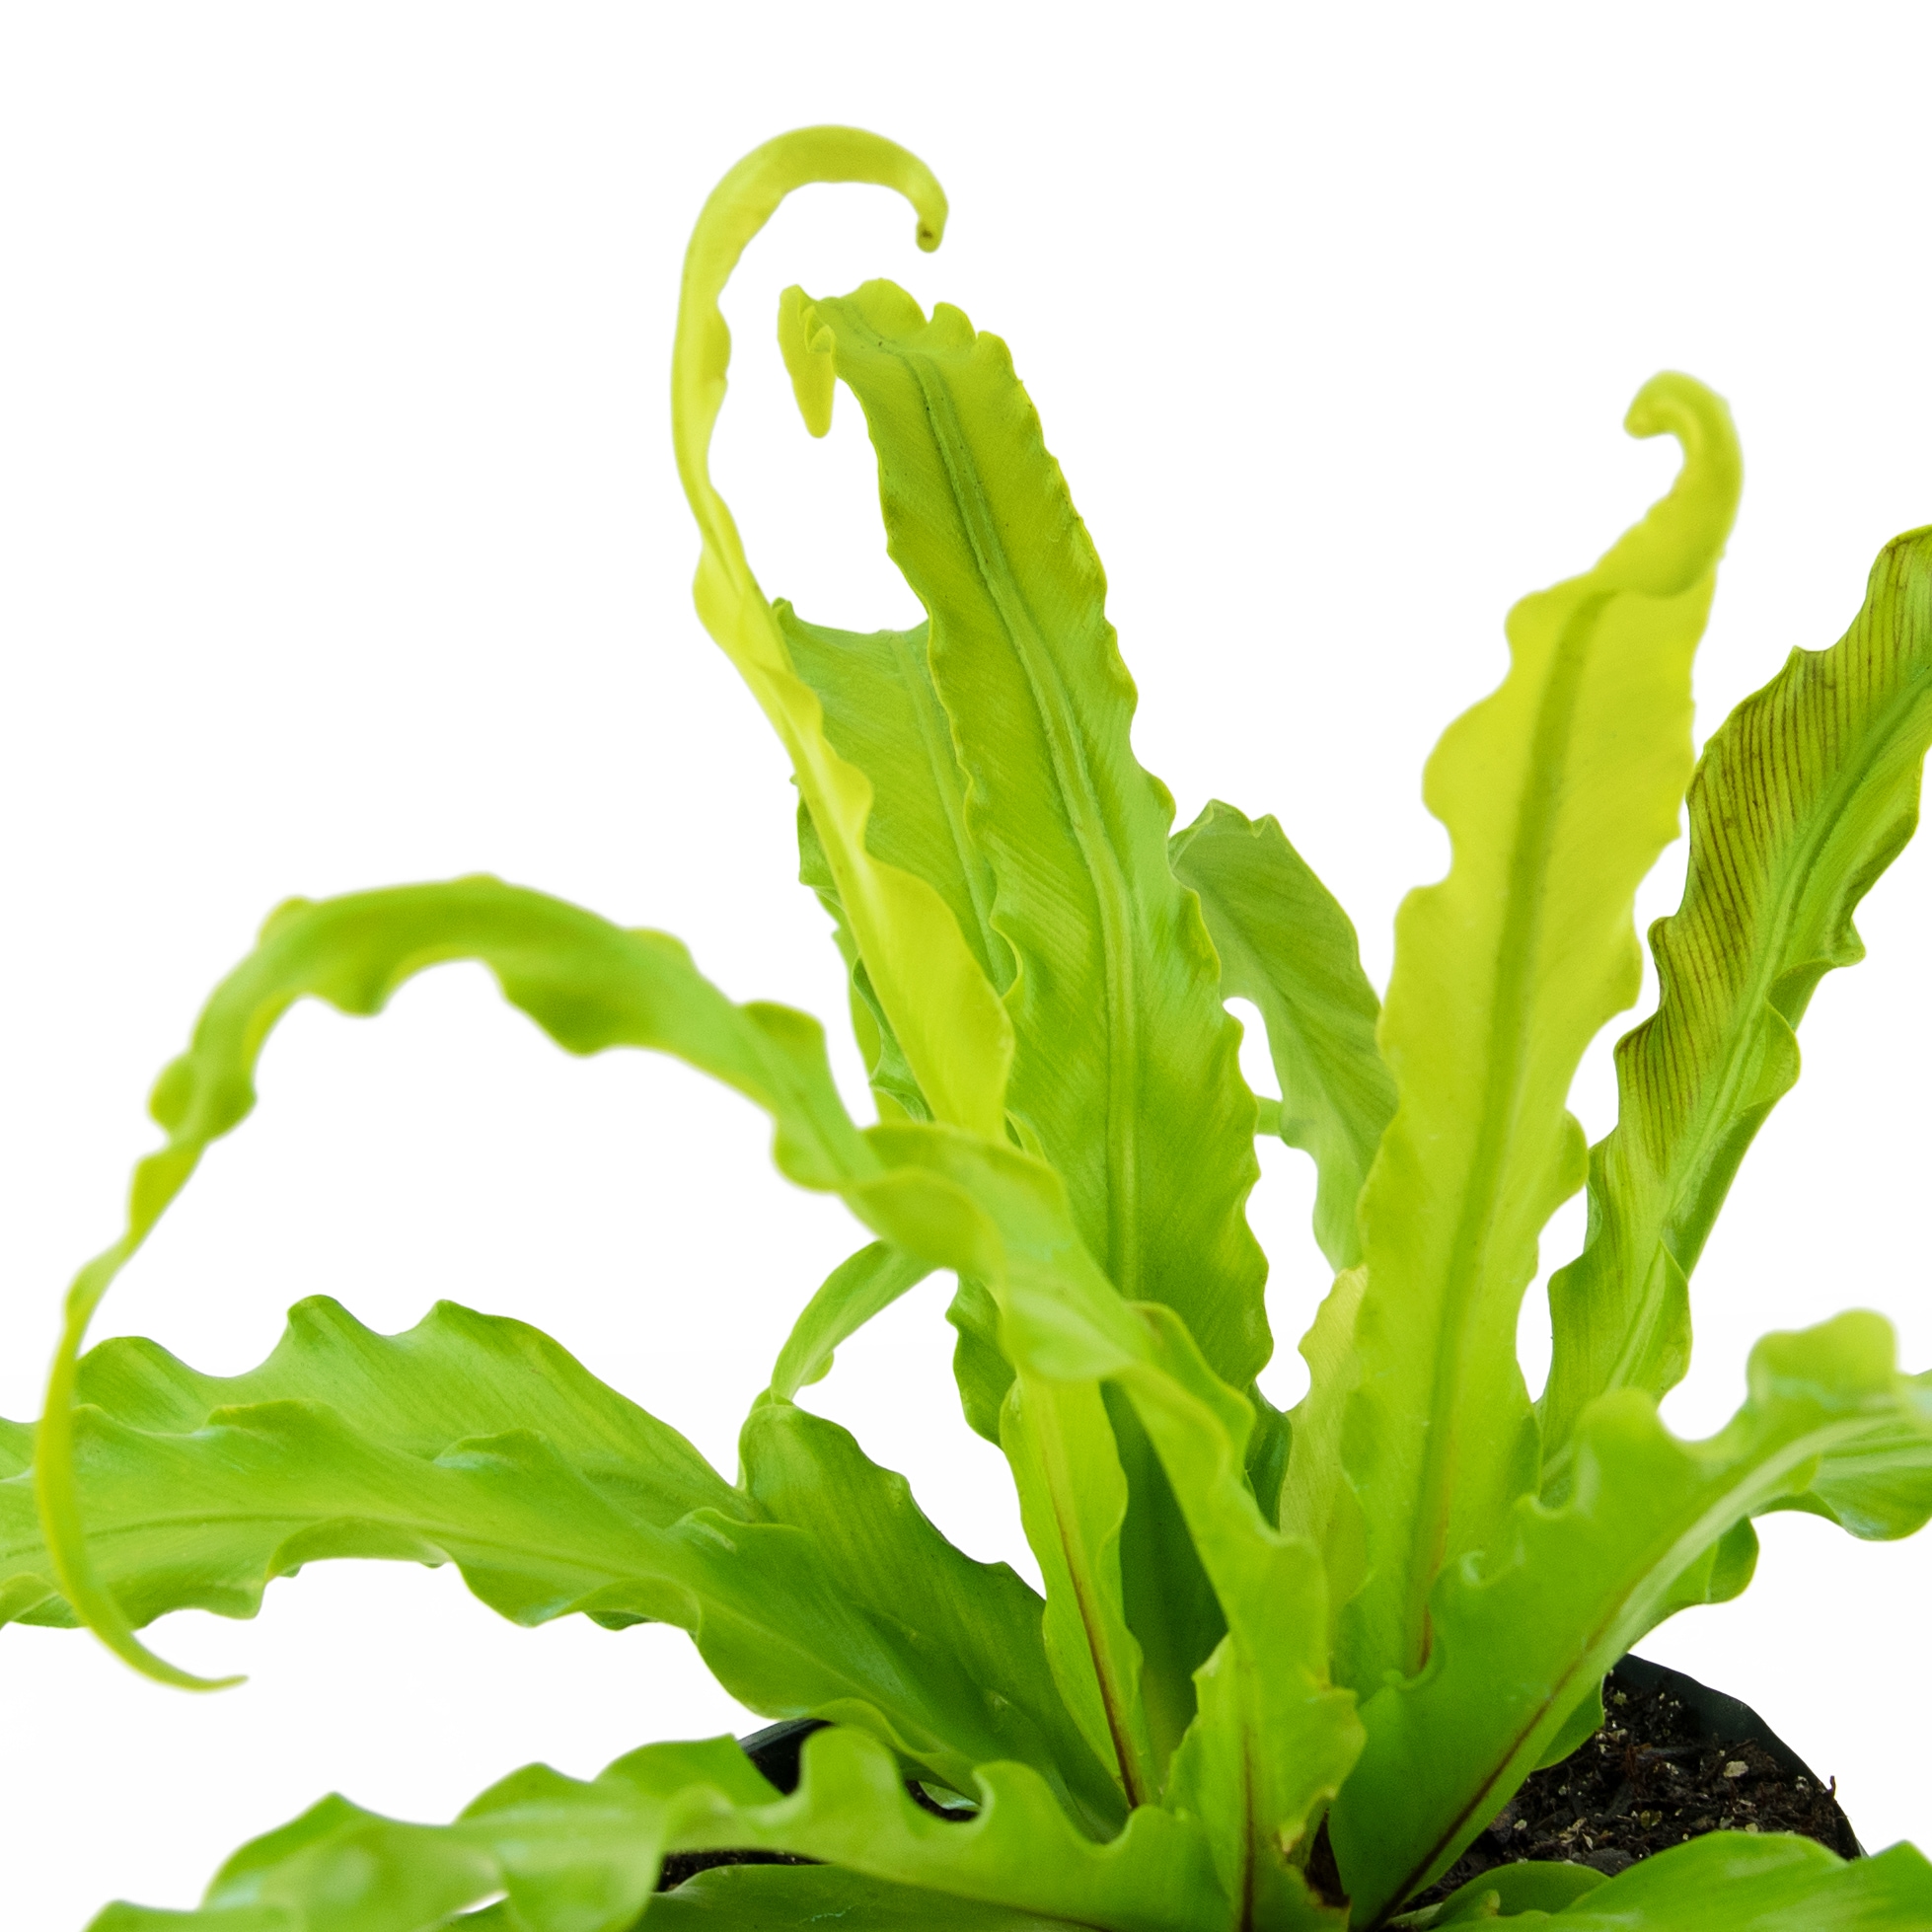 fern houseplant clipart